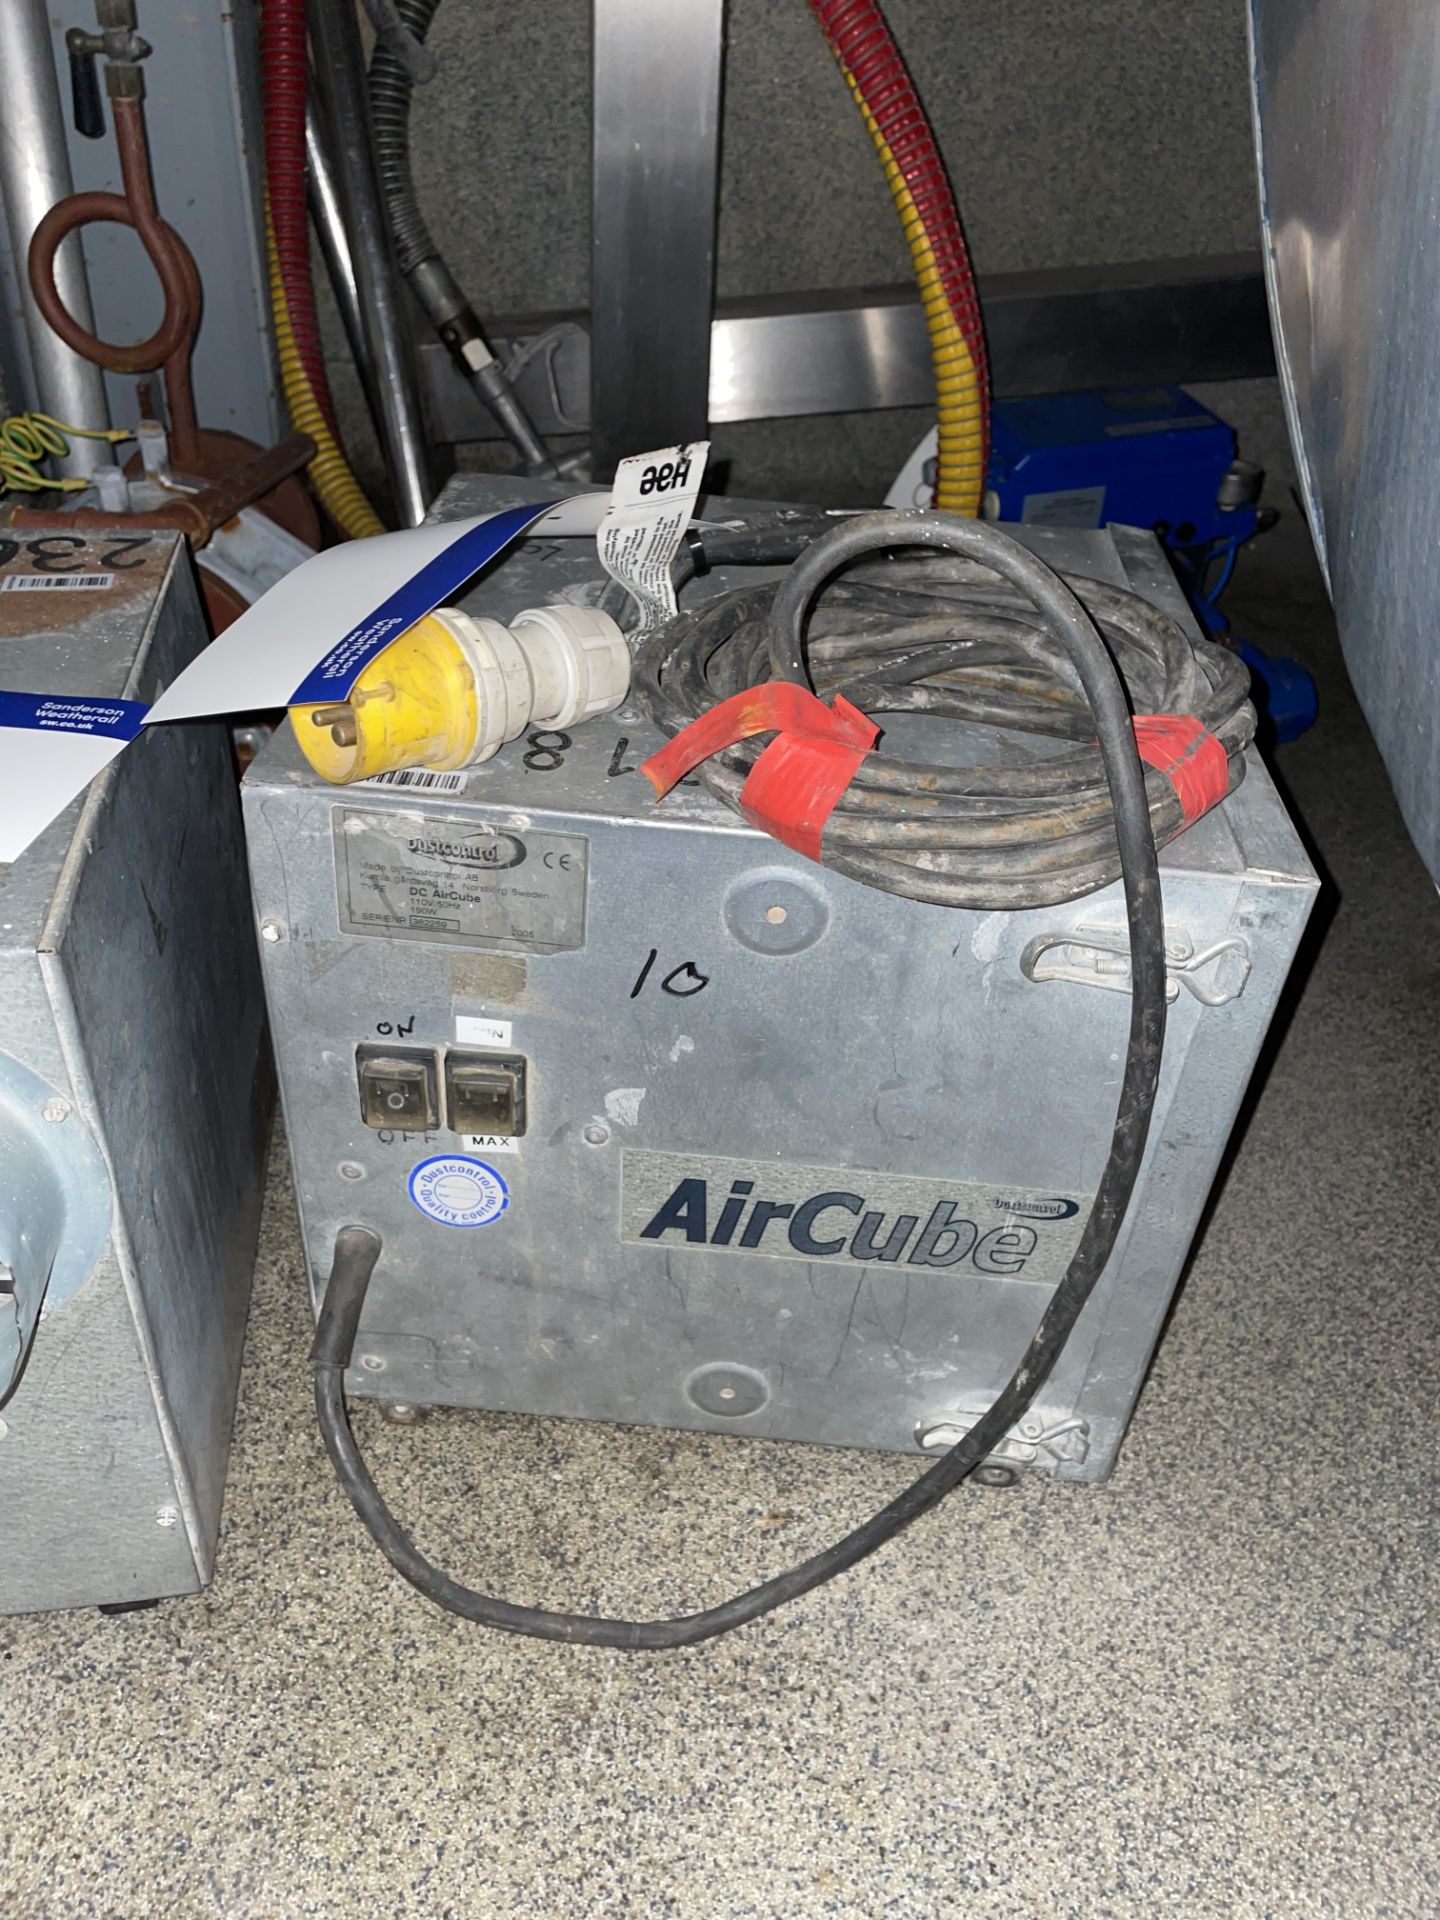 Dustcontrol DC AirCube Air Cleaner, serial no. 382